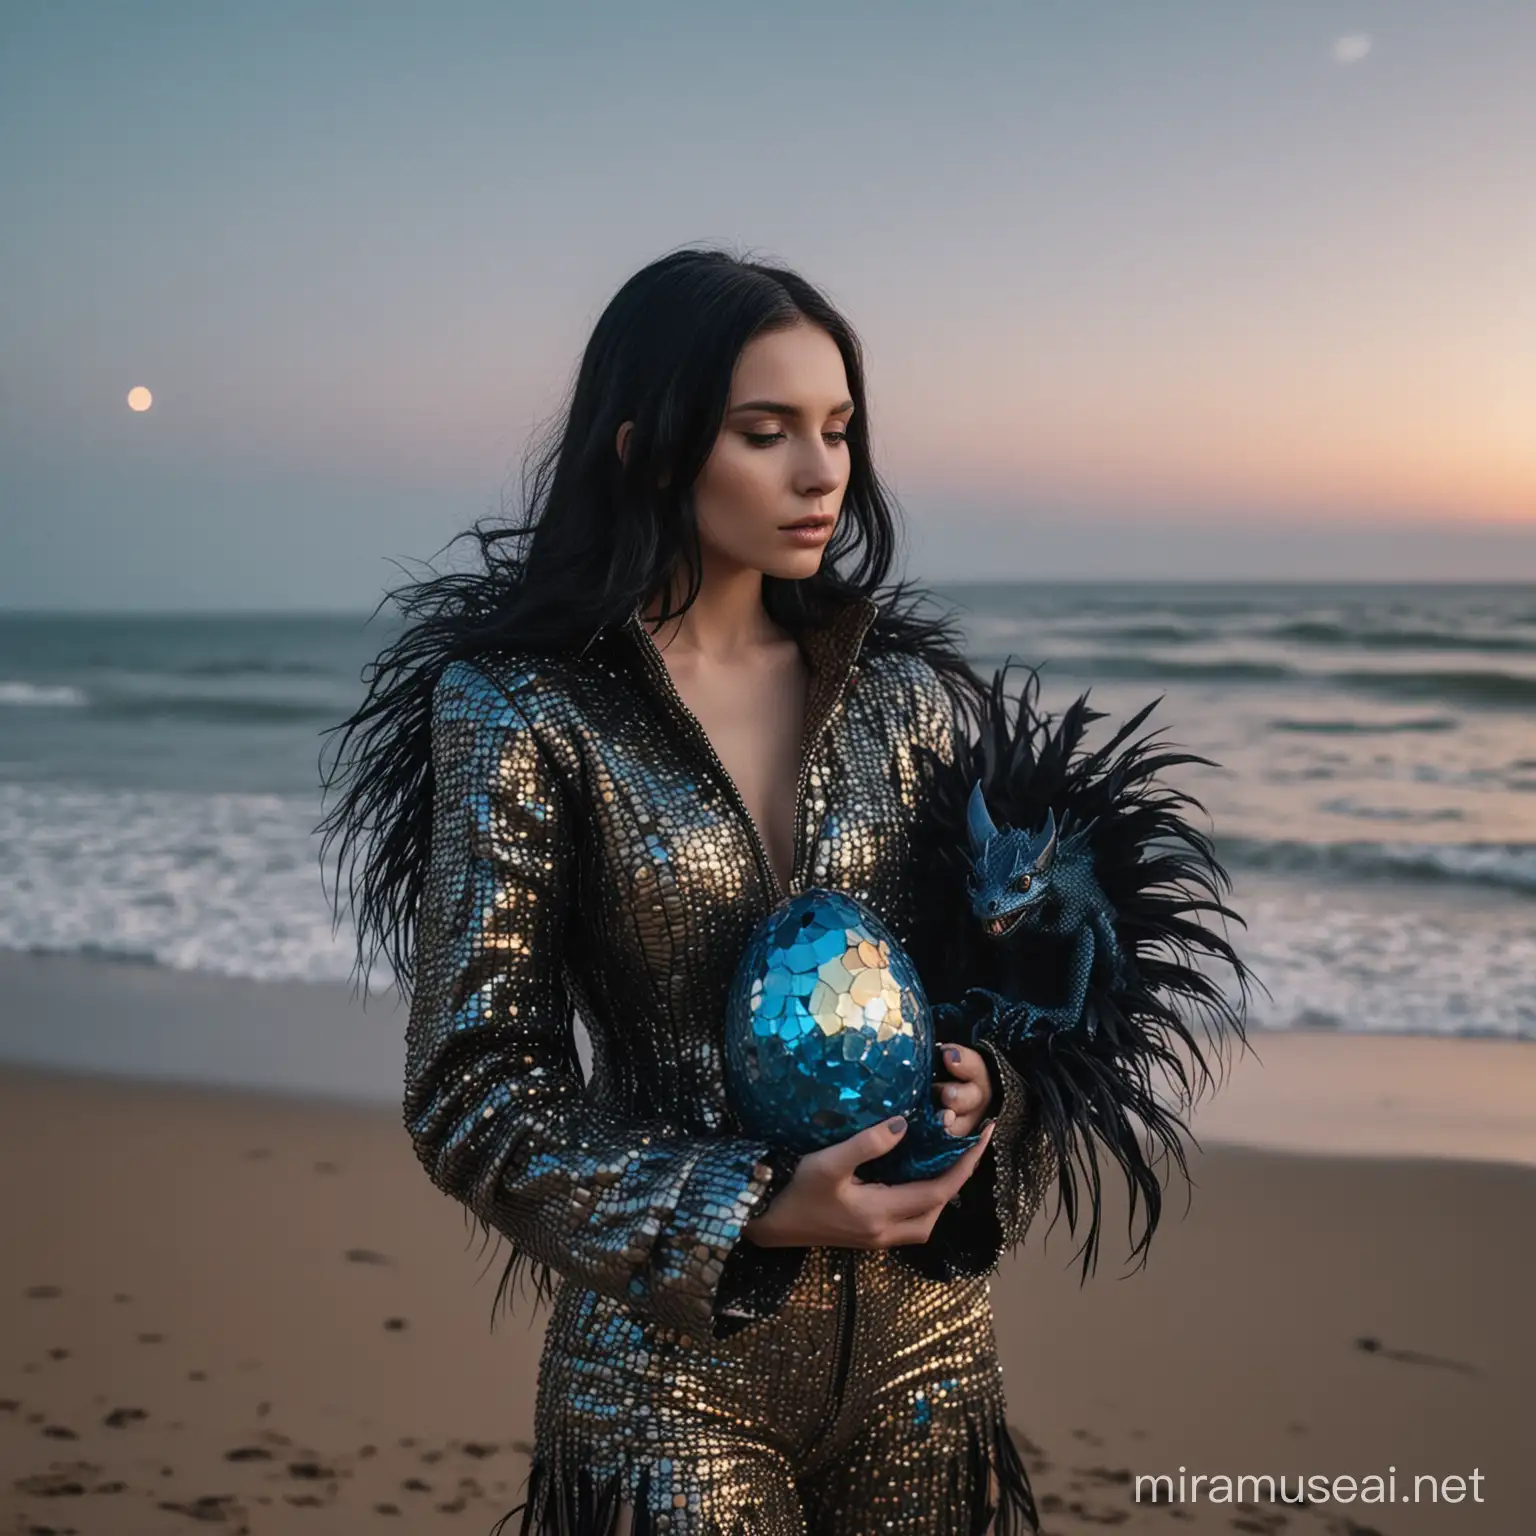 Elegant Woman with Metallic Dragon in Golden Eggshell by Moonlit Beach